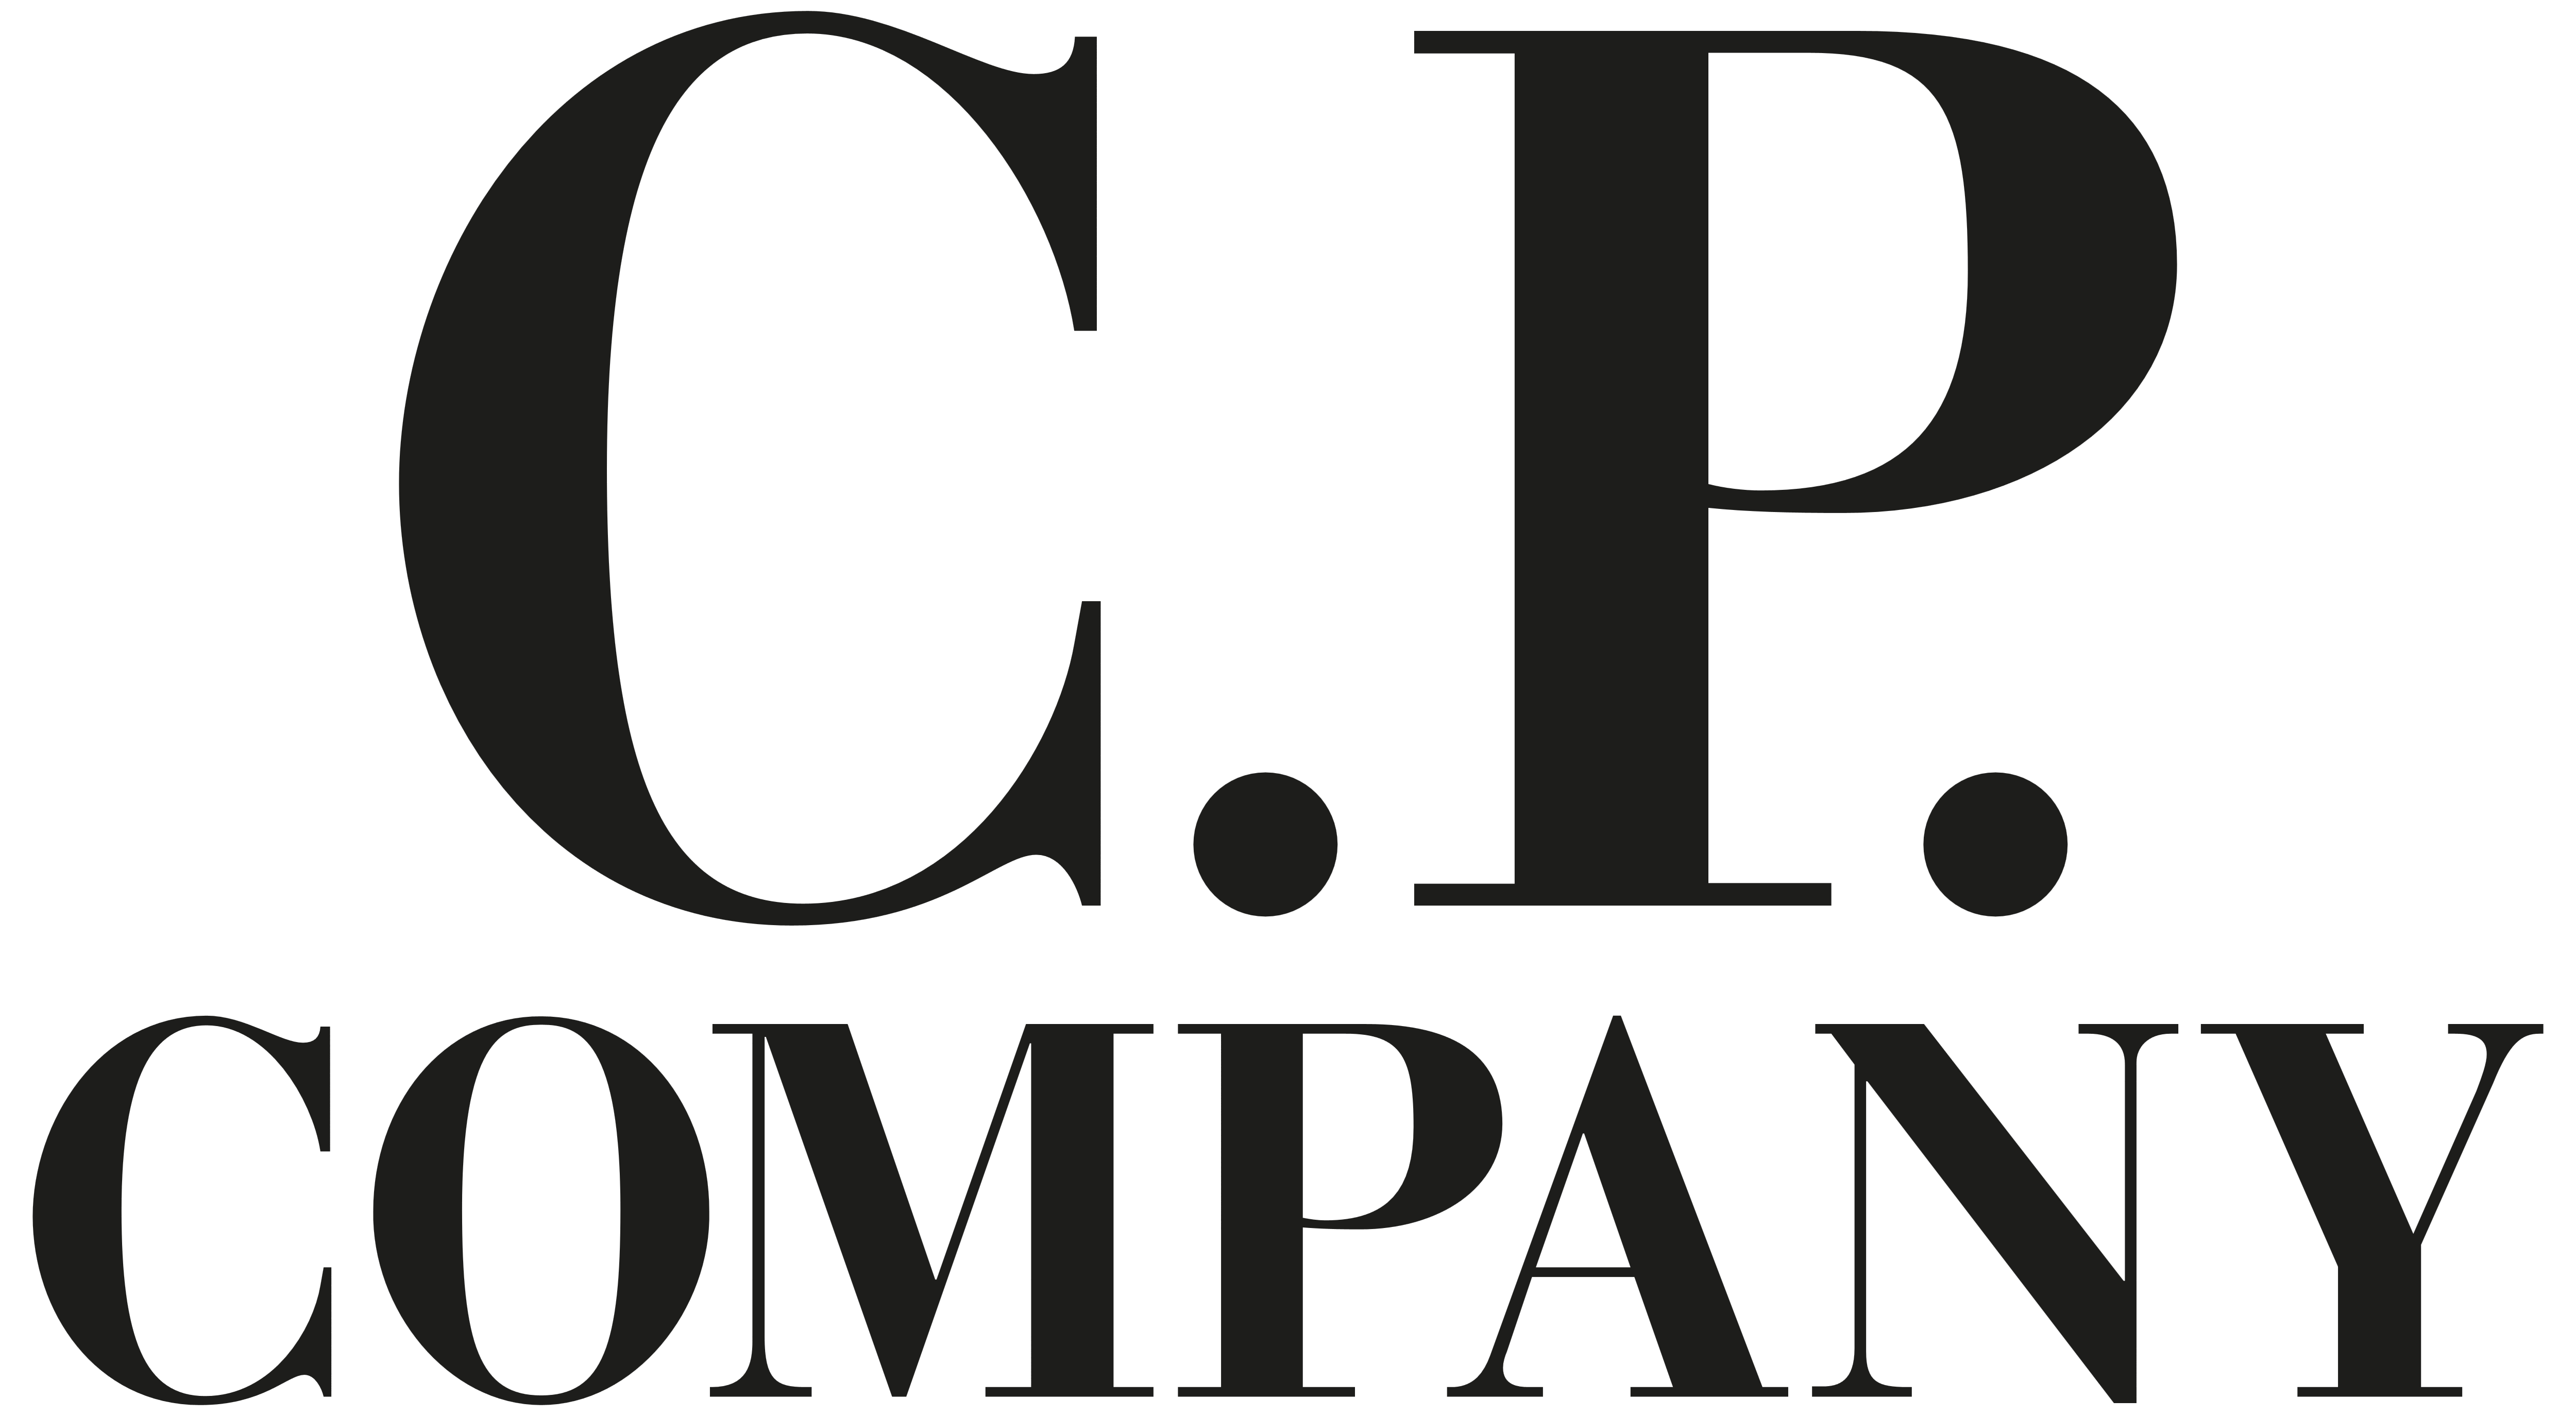 Cp Company Logos Download